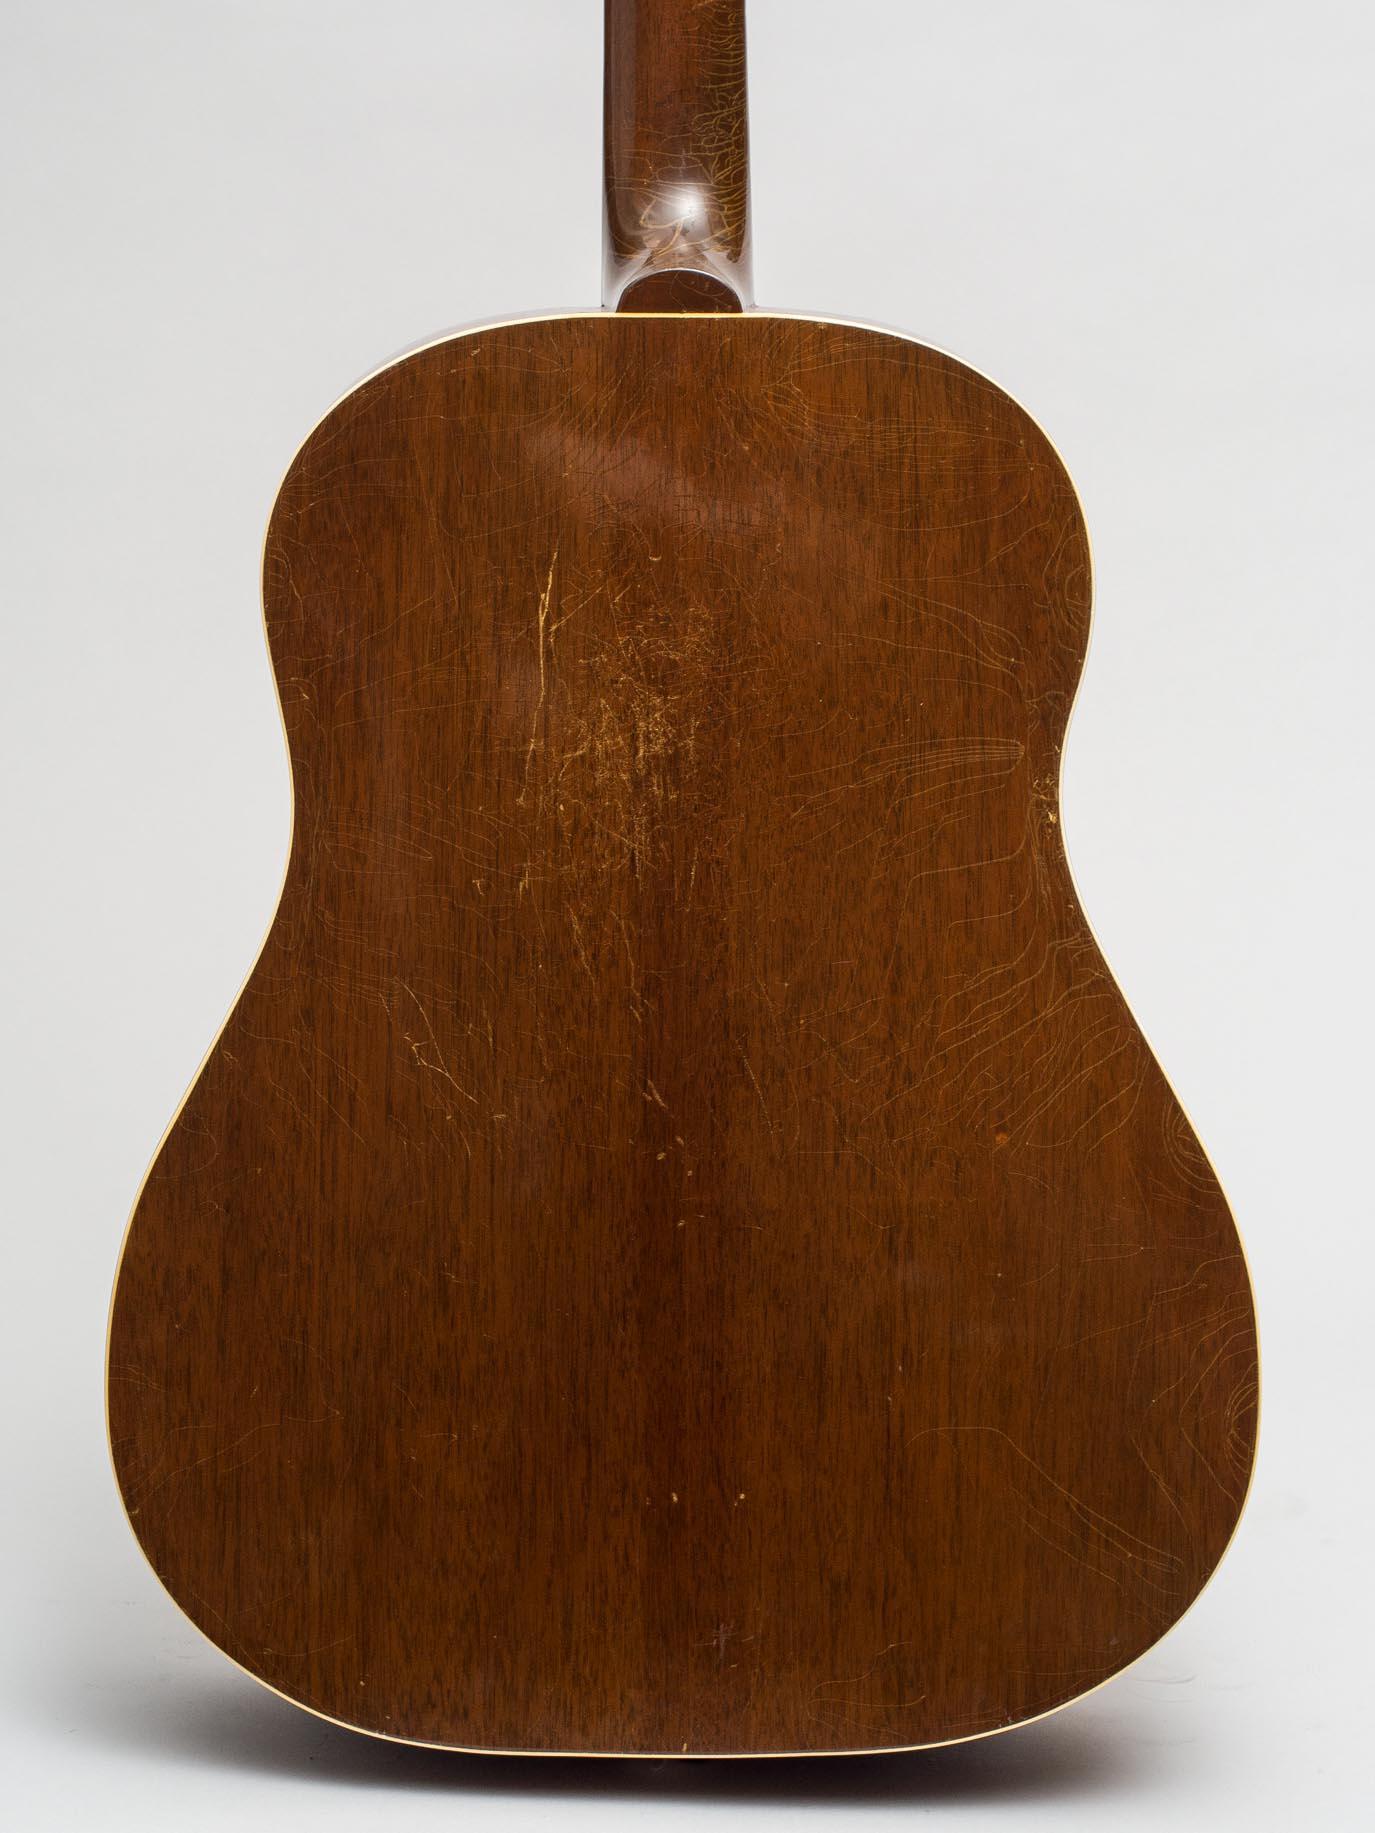 1947 Gibson J-50